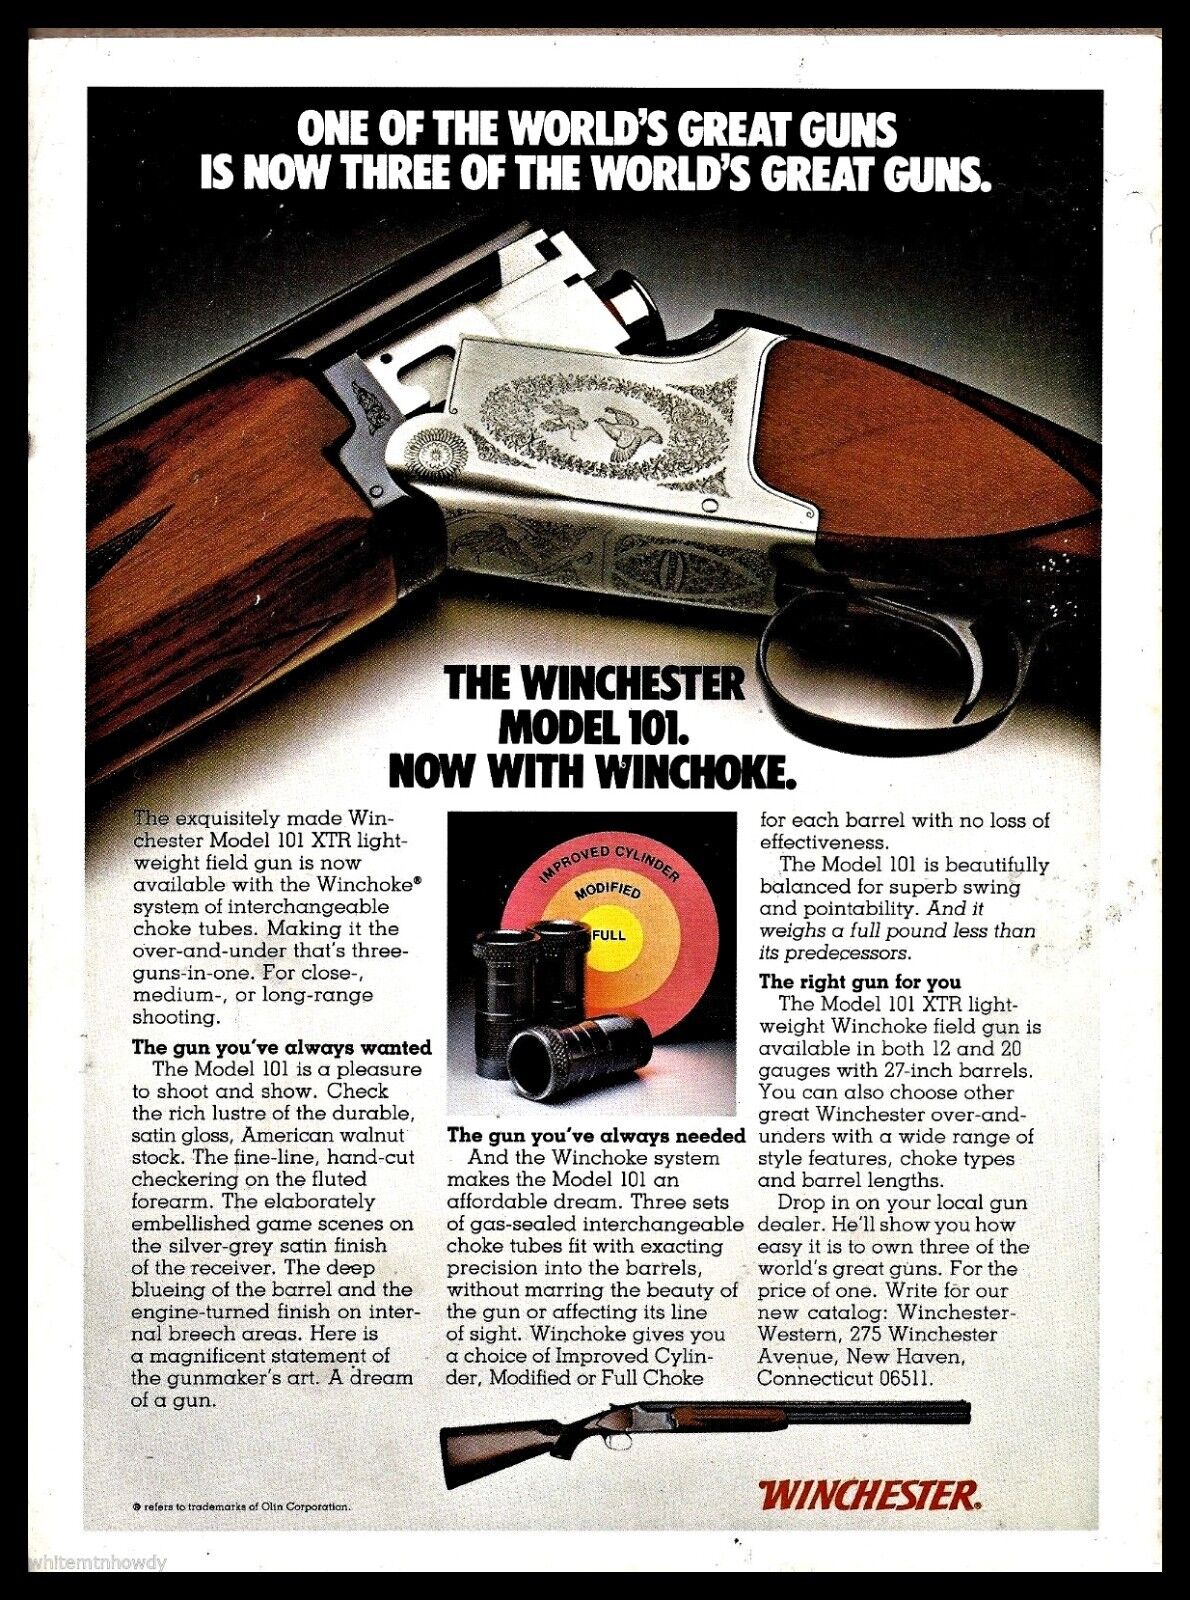 1981 WINCHESTER Model 101 Over Under Shotgun AD Vintage Firearms Advertising